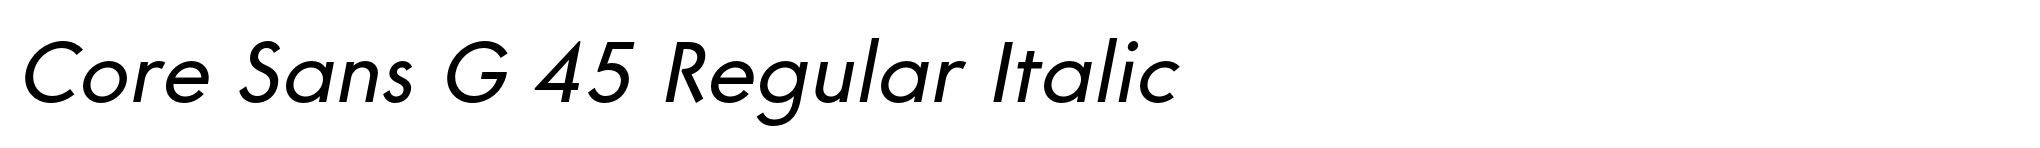 Core Sans G 45 Regular Italic image